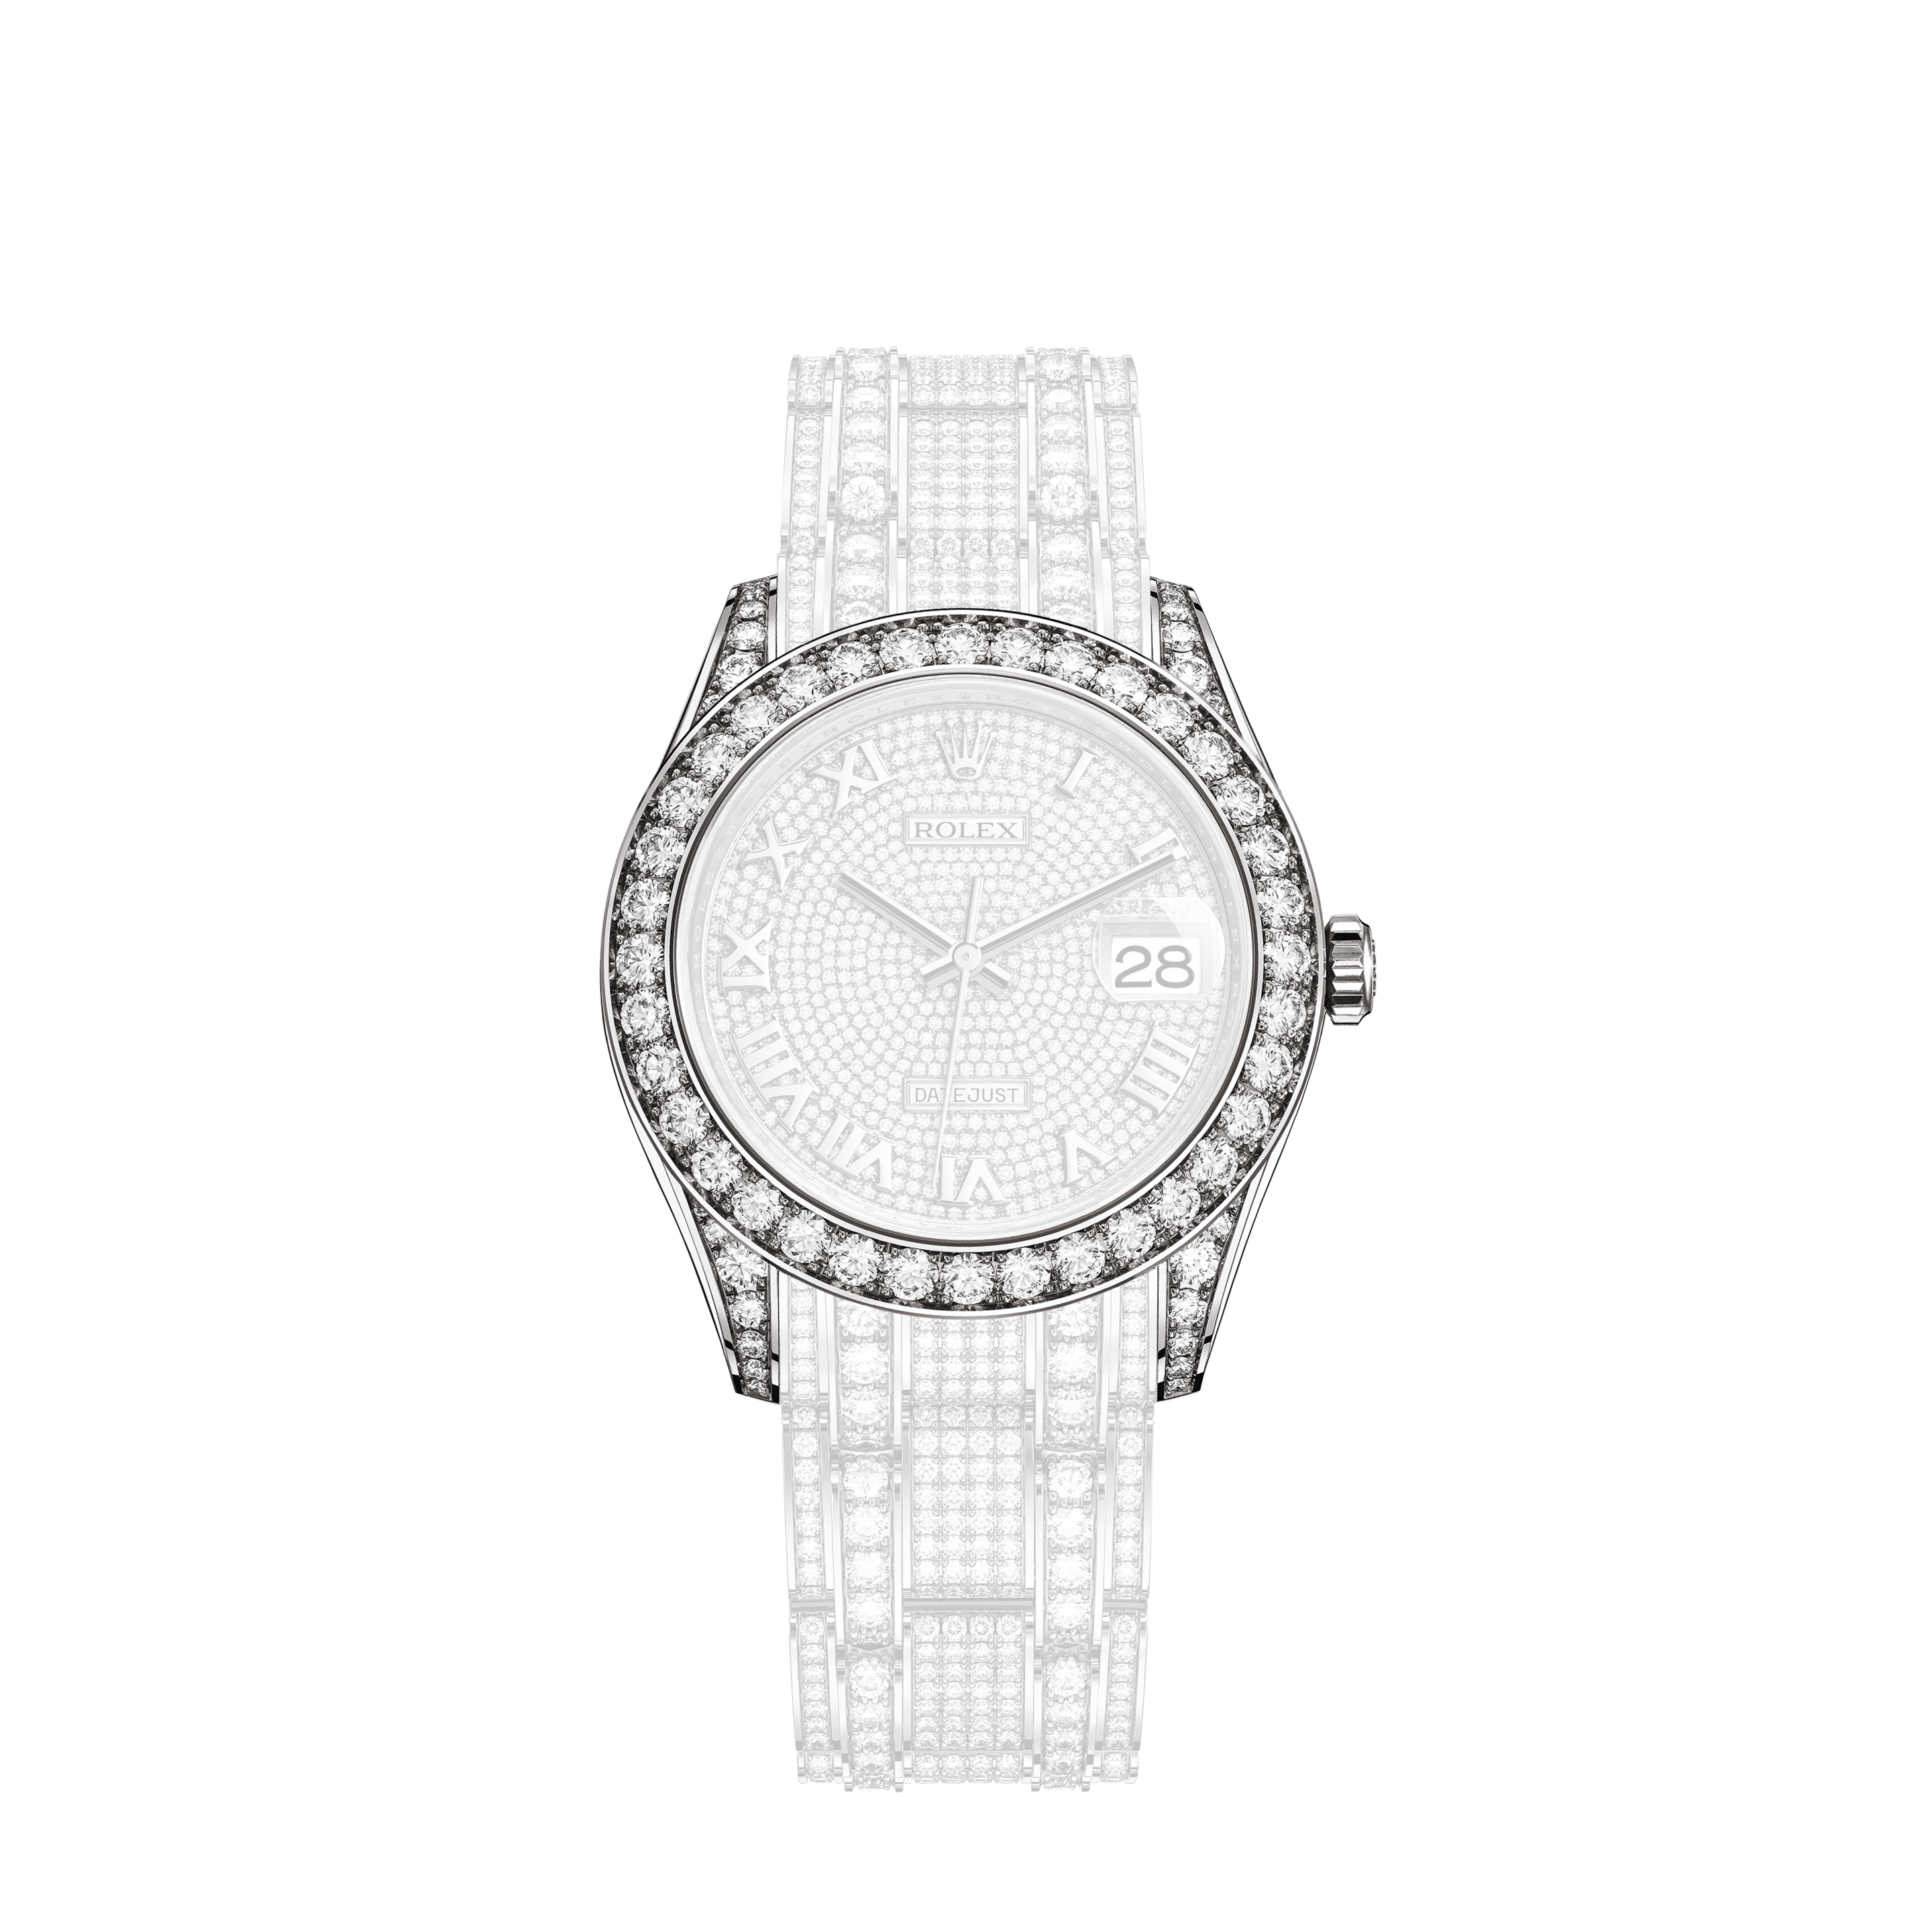 Rolex Datejust Steel 26mm Jubilee Watch 2CT Diamond Bezel / Aquamarine MOP Dial